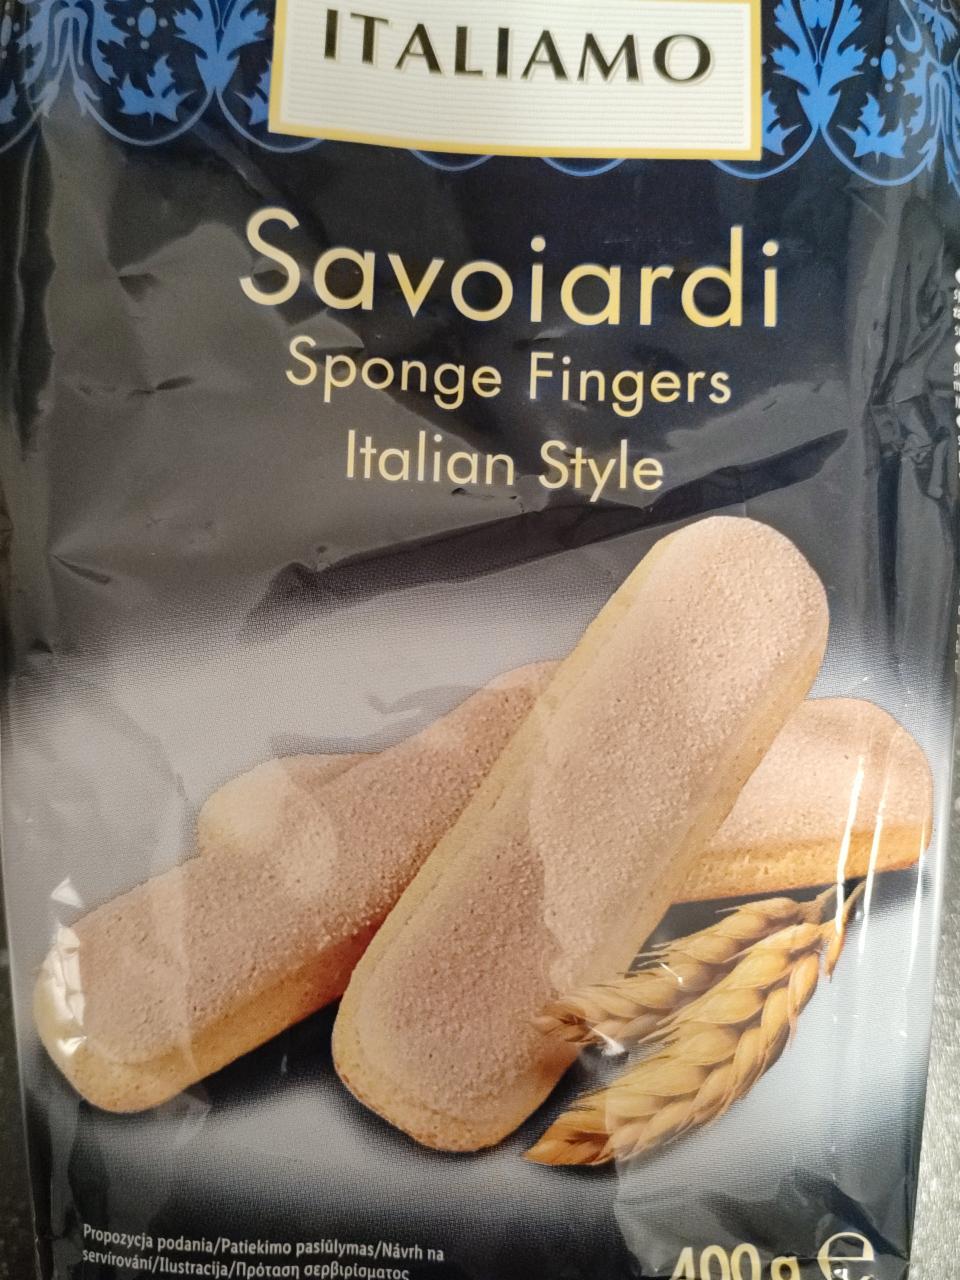 Zdjęcia - Savoiardi Sponge Fingers italian style Italiamo